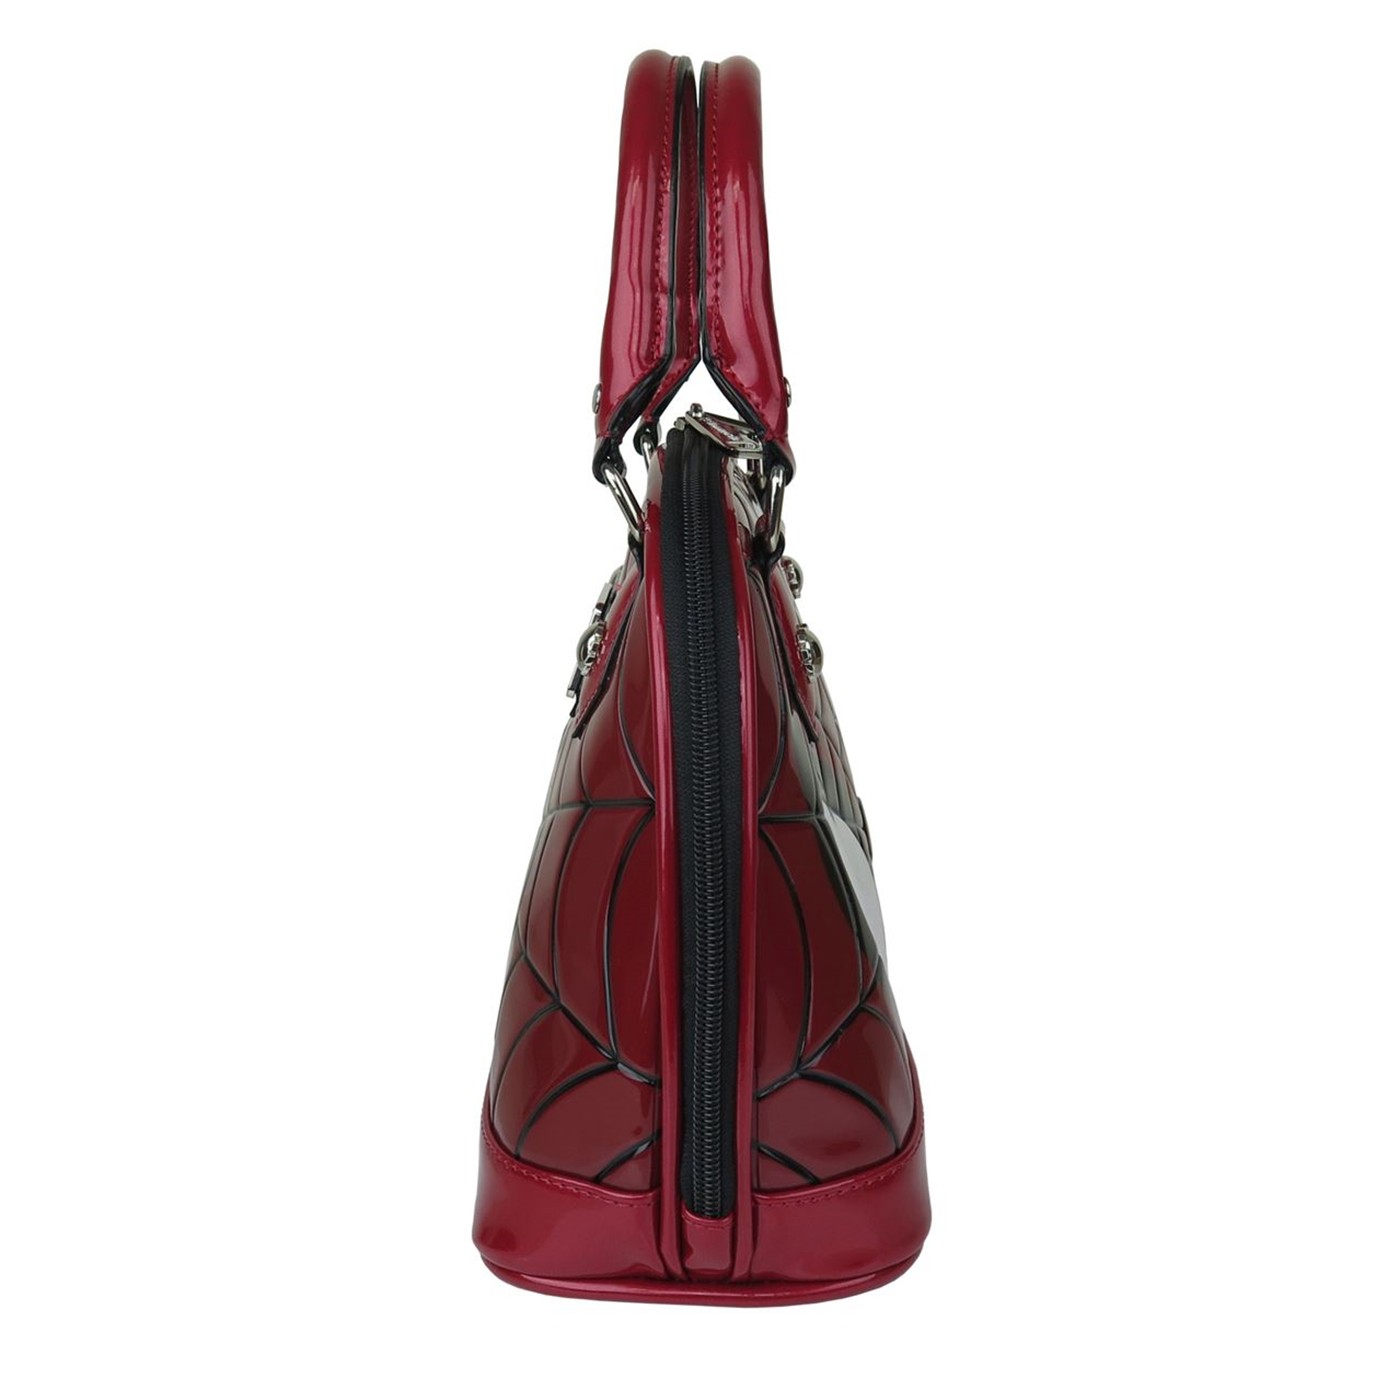 Spiderman Patent Leather Dome Handbag